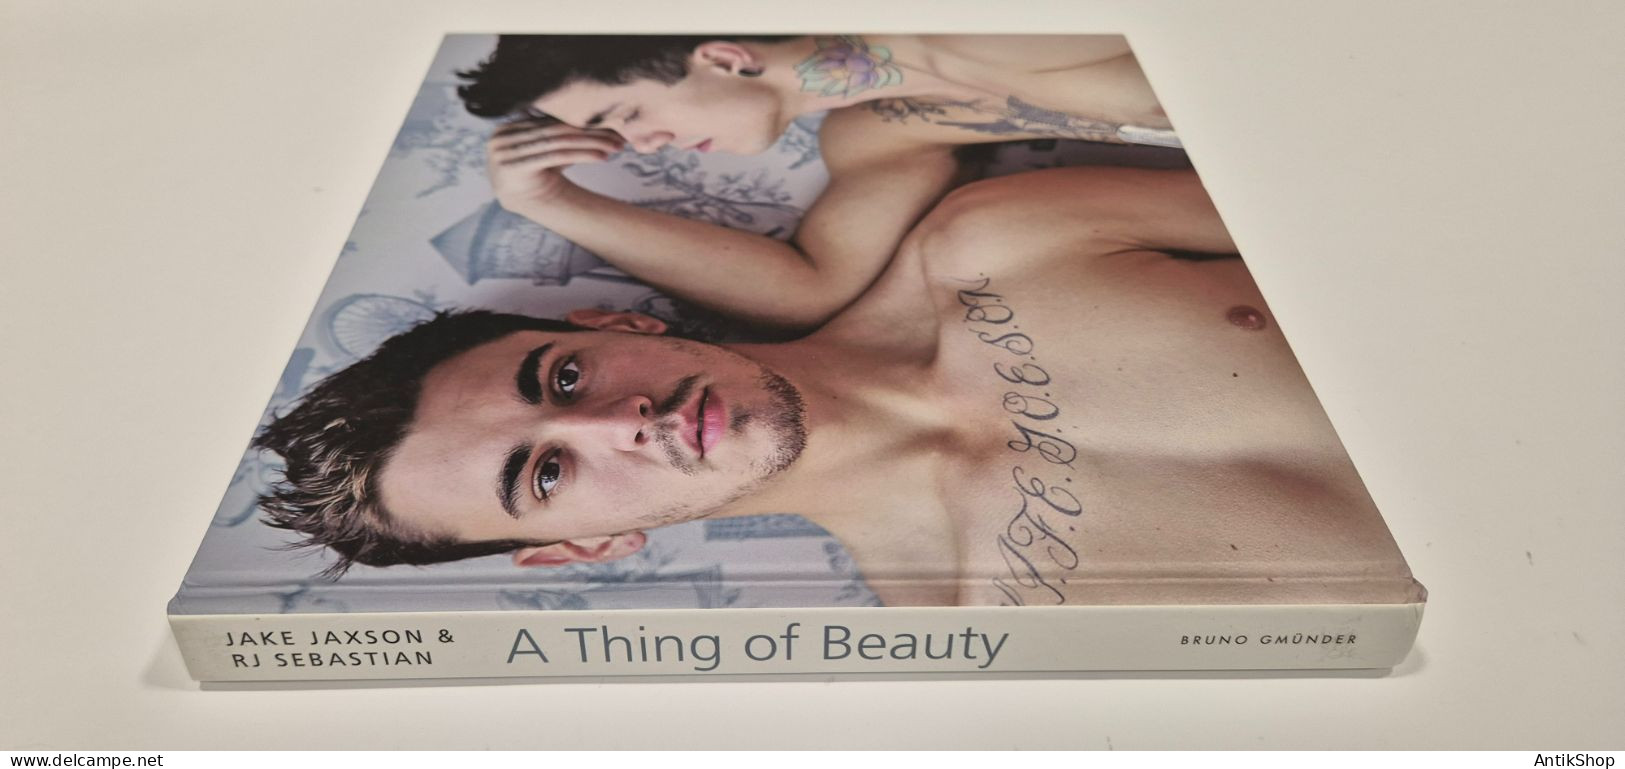 Jake Jackson & RJ Sebastian - A Thing Of Beauty - 2014 New Gay Sex Erotik - Fine Arts